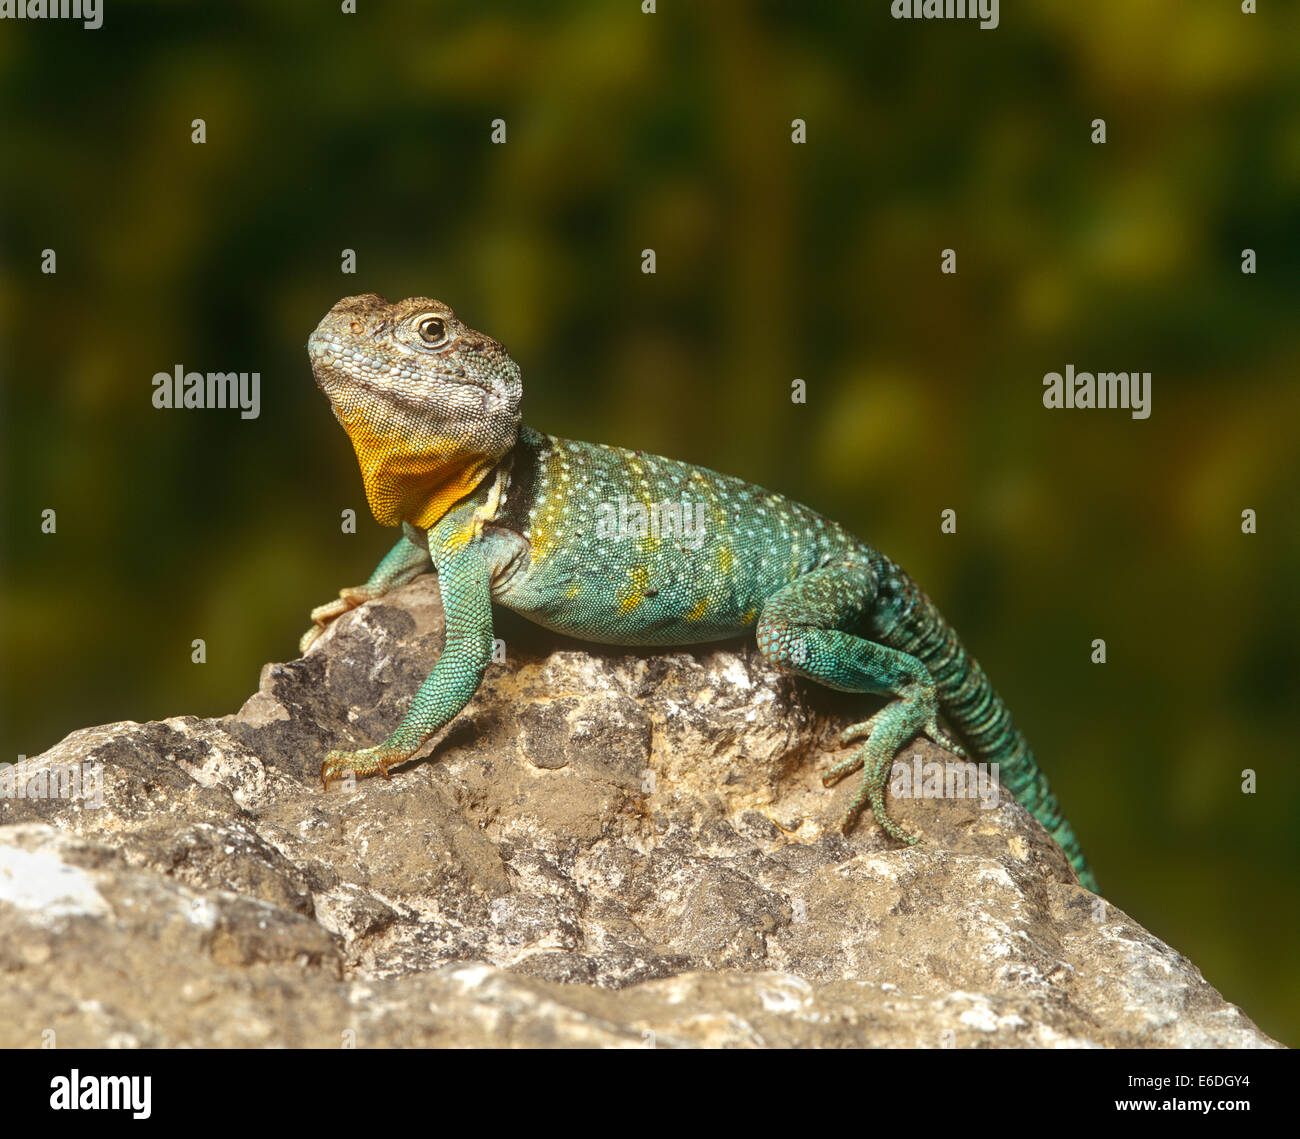 Lizard sitting on a rock Stock Photo